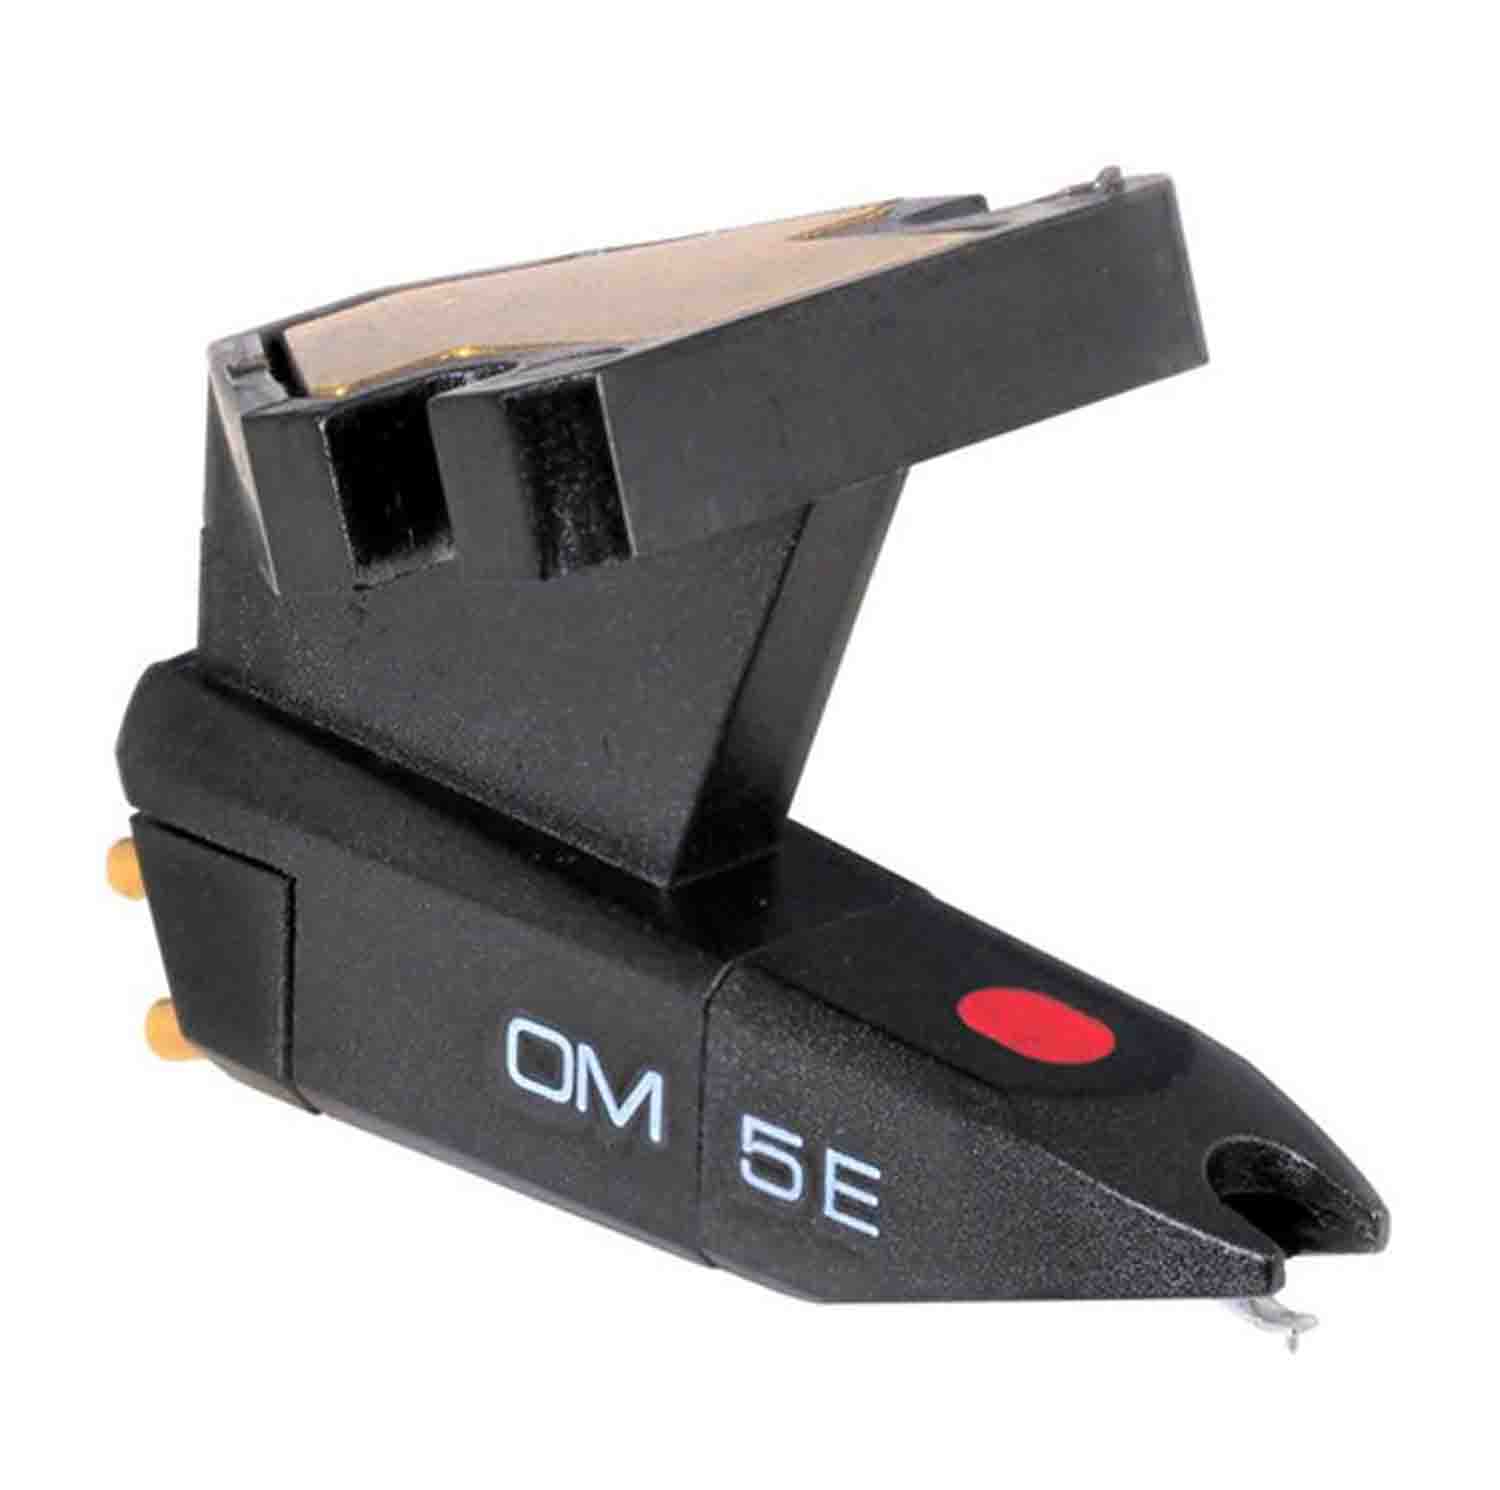 Ortofon OM 5e, OM Series Cartridge and Stylus (Single) Ortofon